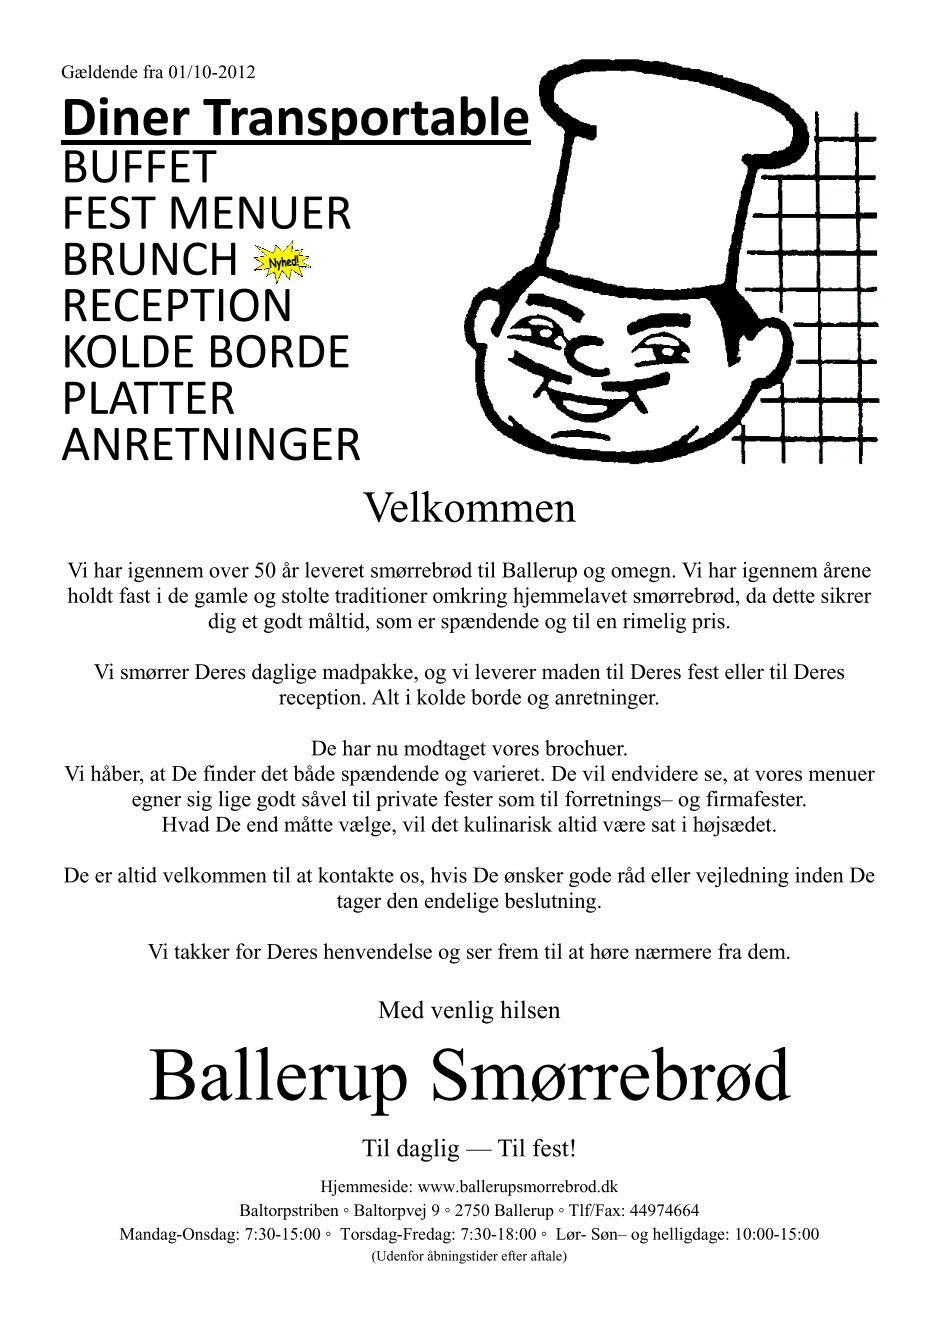 1 free Magazines from BALLERUPSMORREBROD.DK